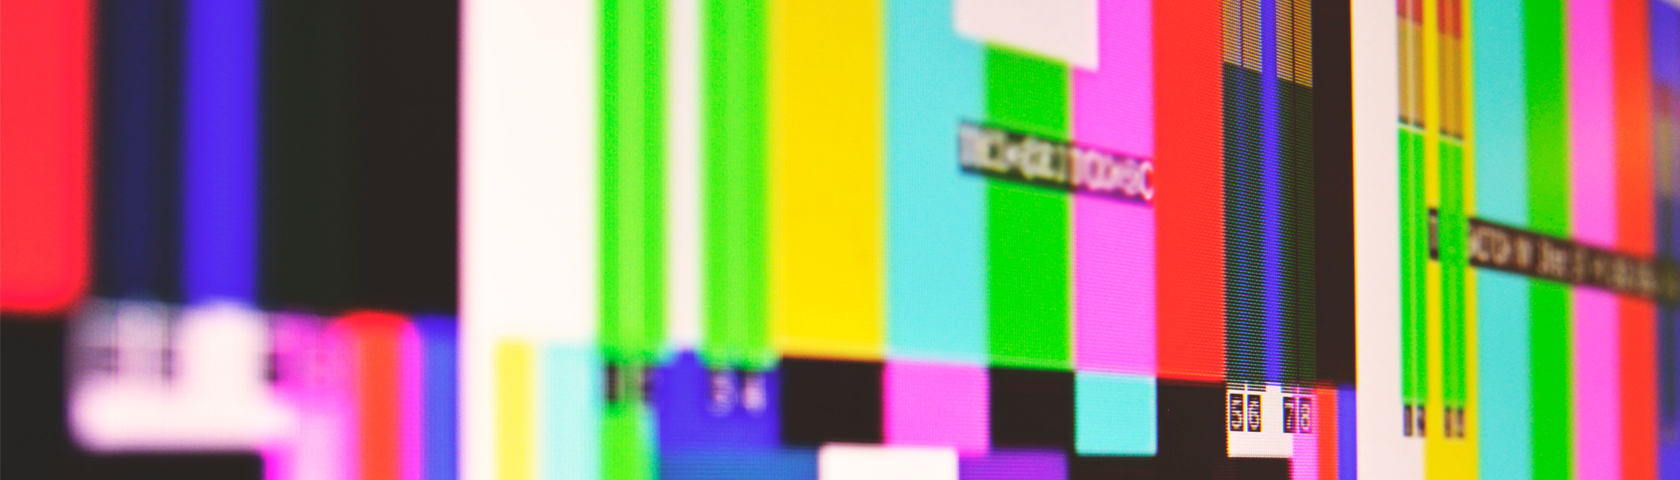 Colorful TV bars.